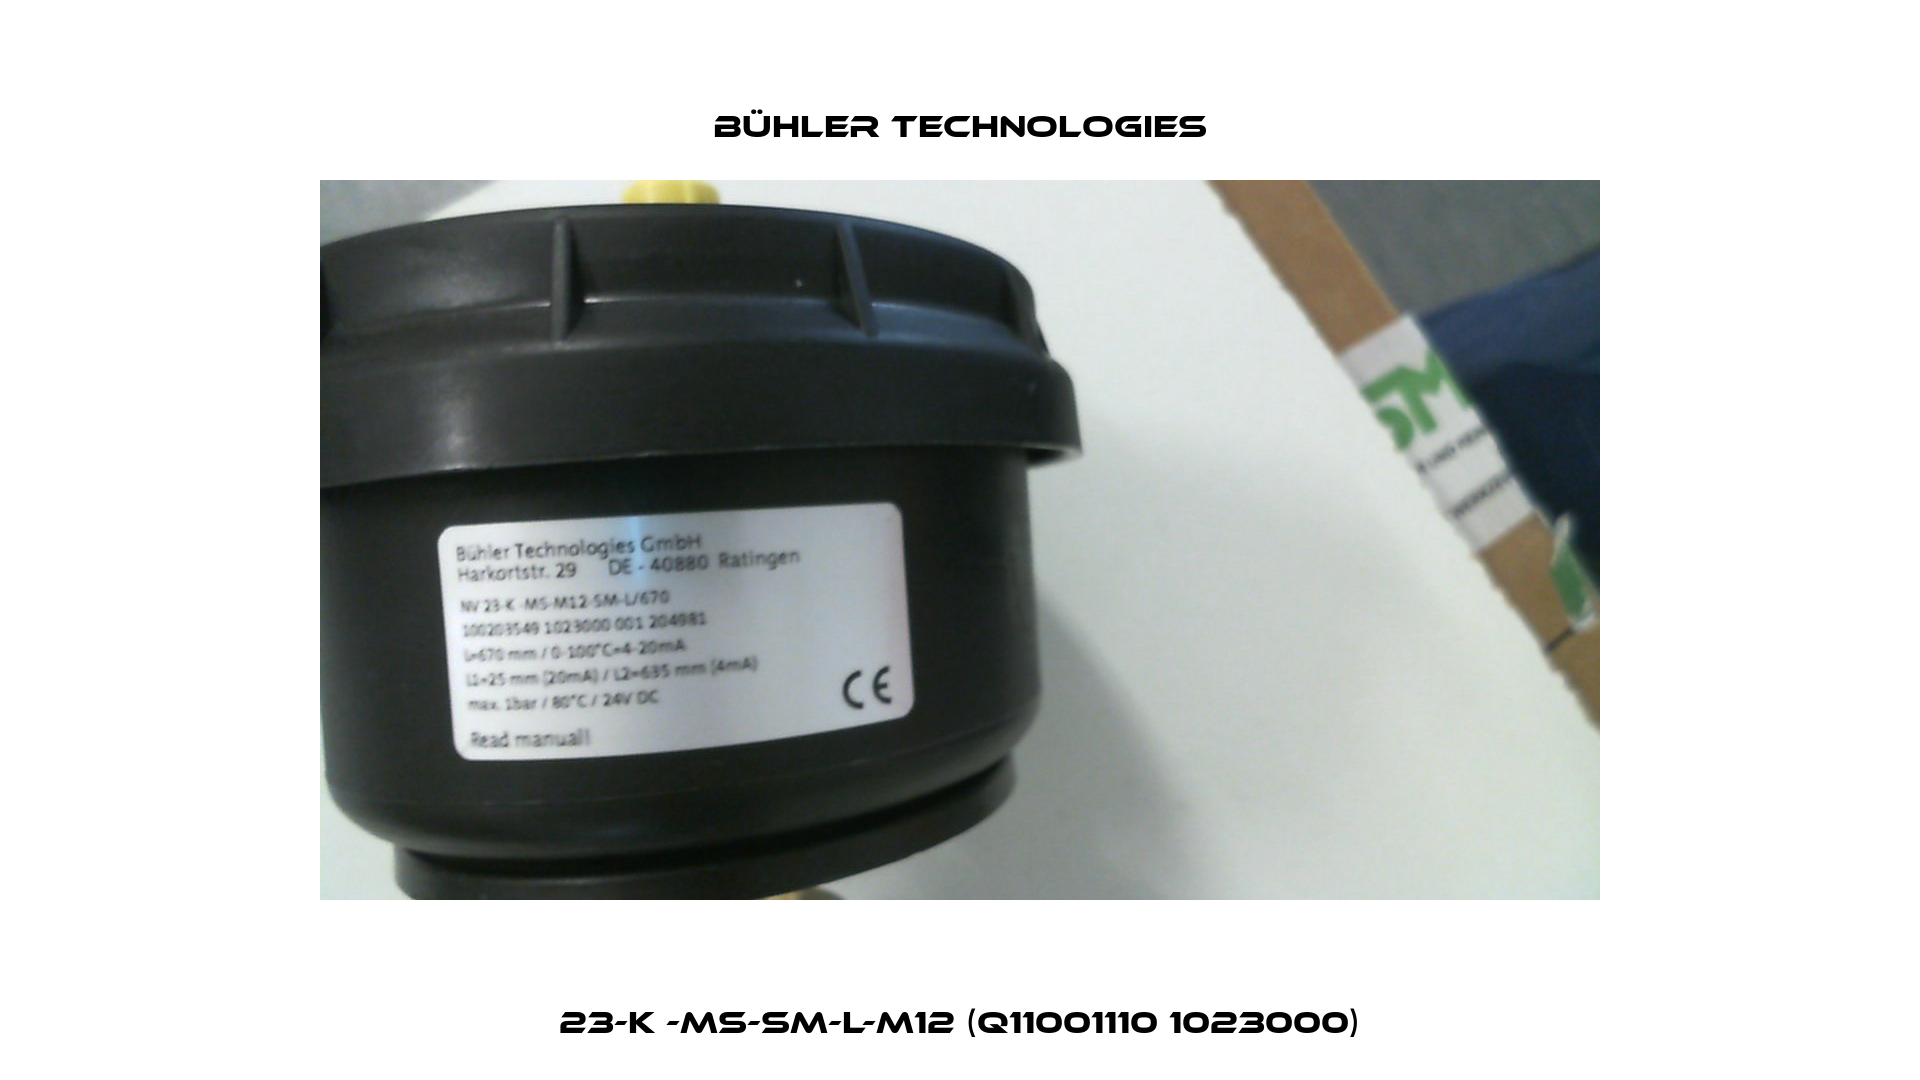 23-K -MS-SM-L-M12 (Q11001110 1023000) Bühler Technologies